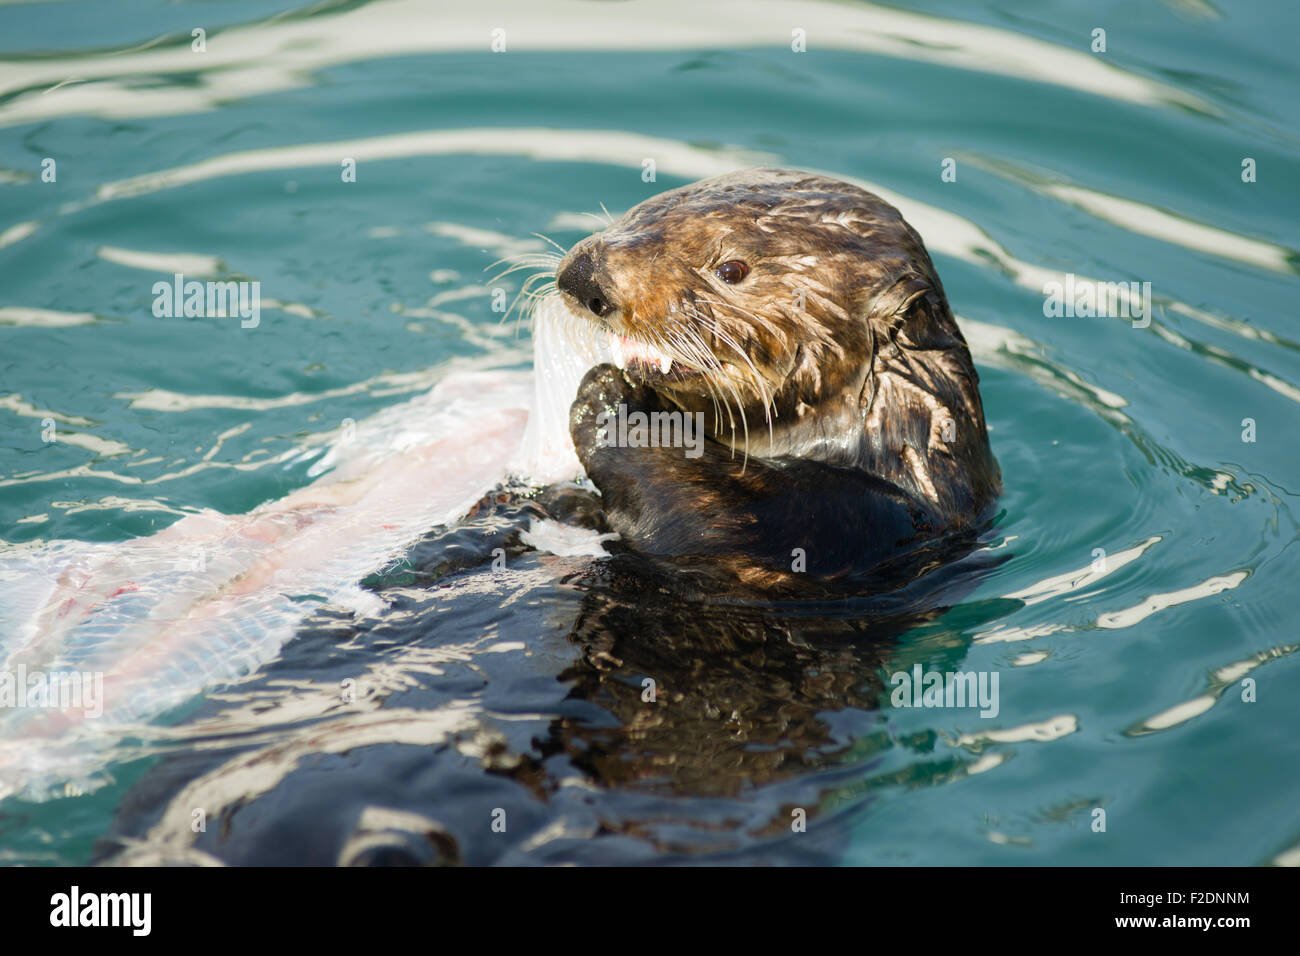 A Sea Otter eats breakfast in a boat slip in the marina Stock Photo